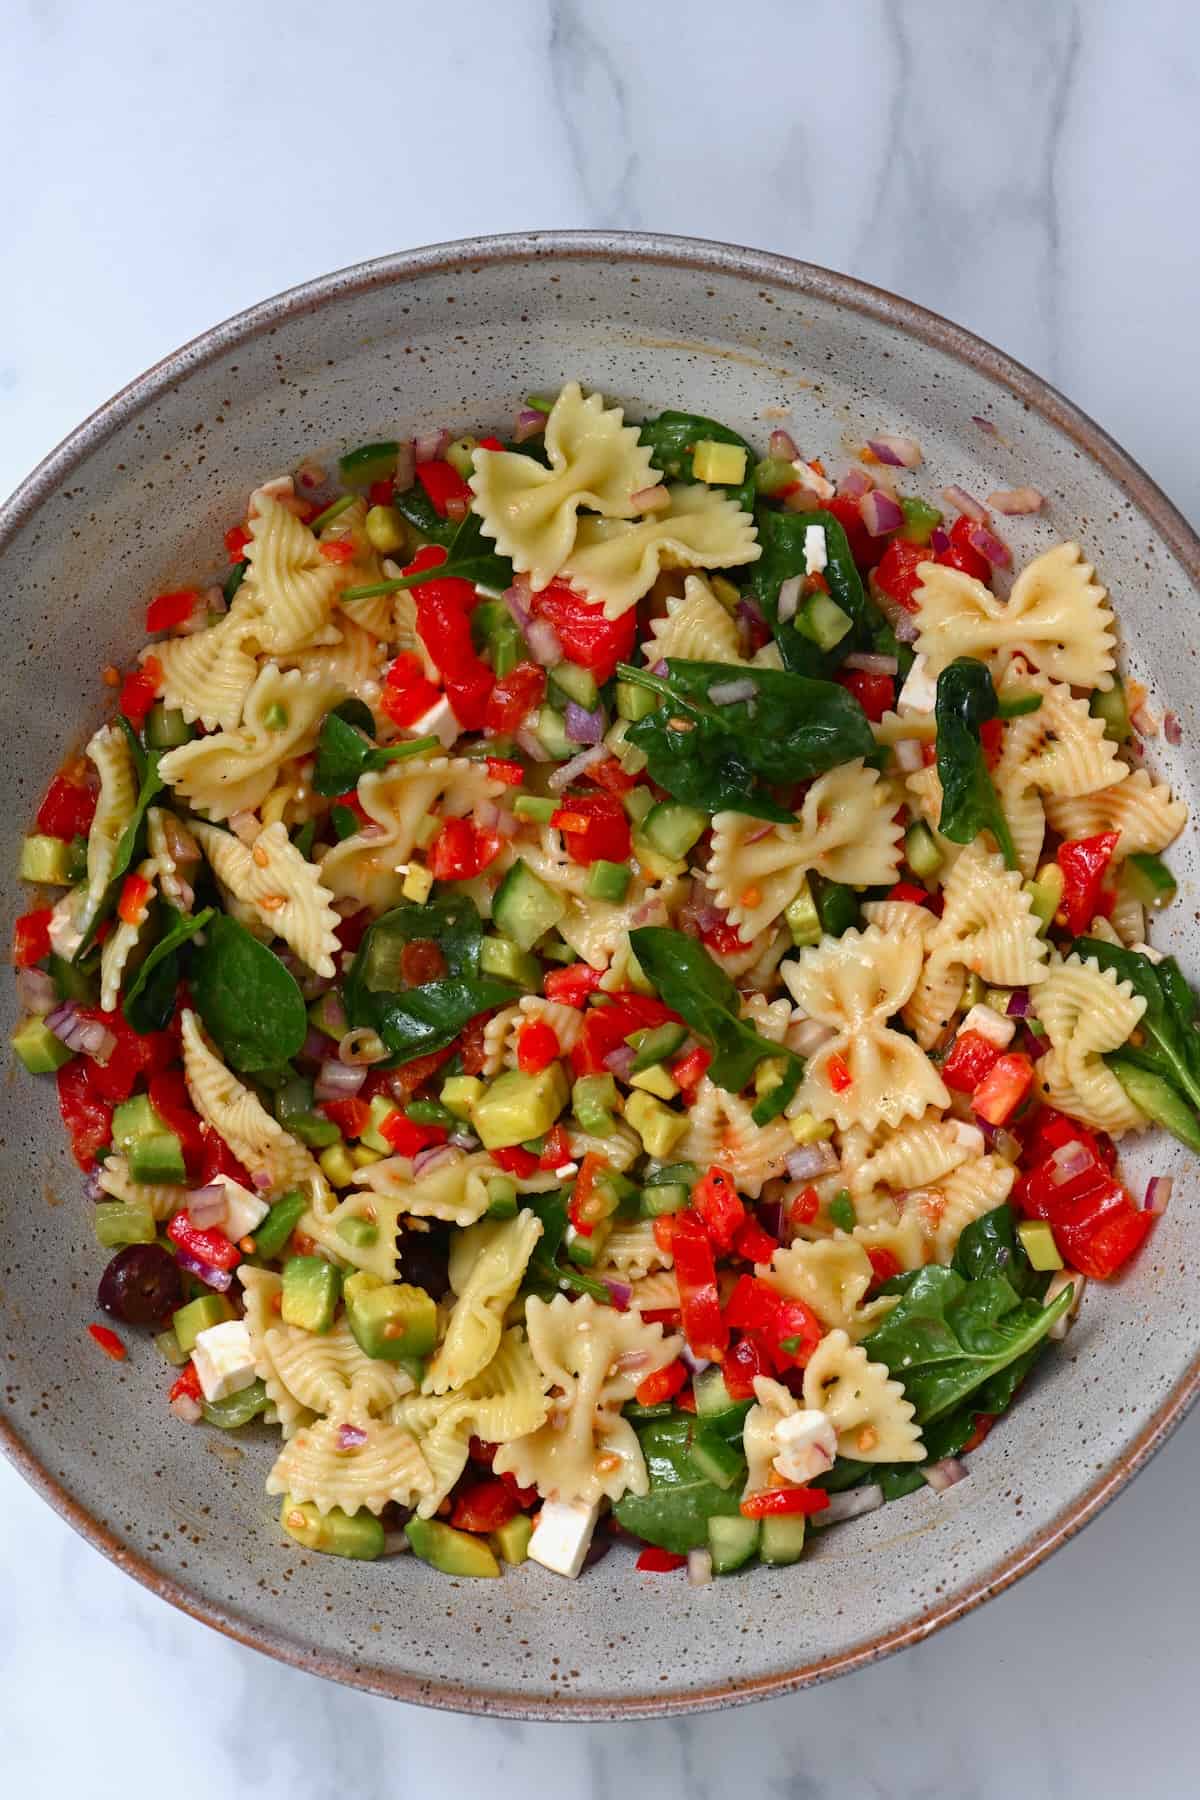 A serving of bowtie pasta salad